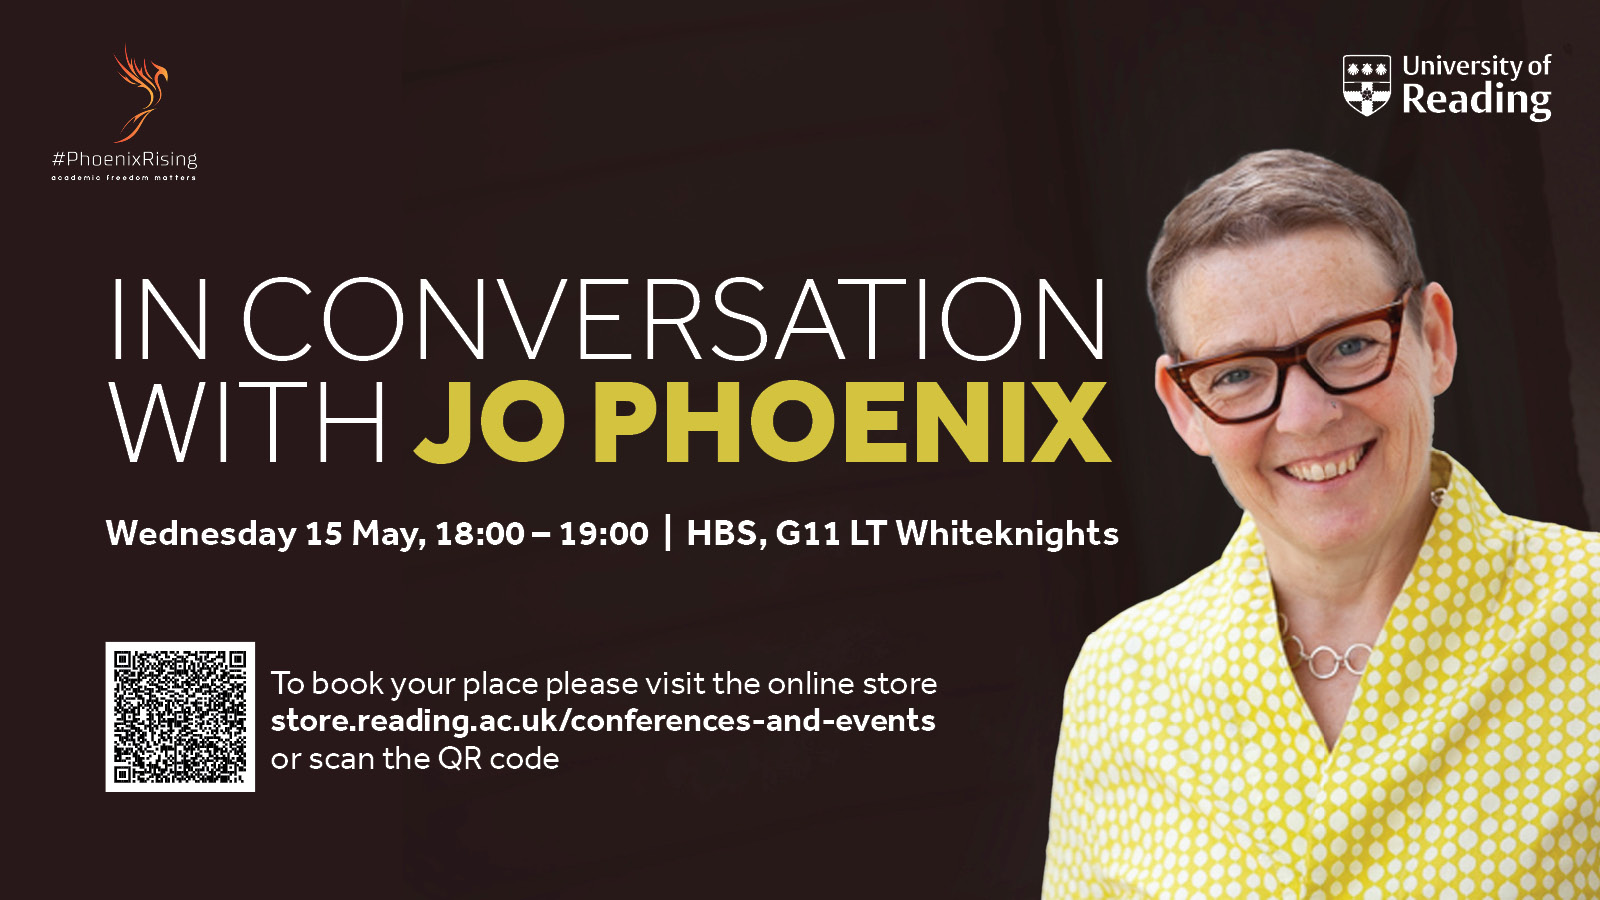 In Conversation with JO PHOENIX